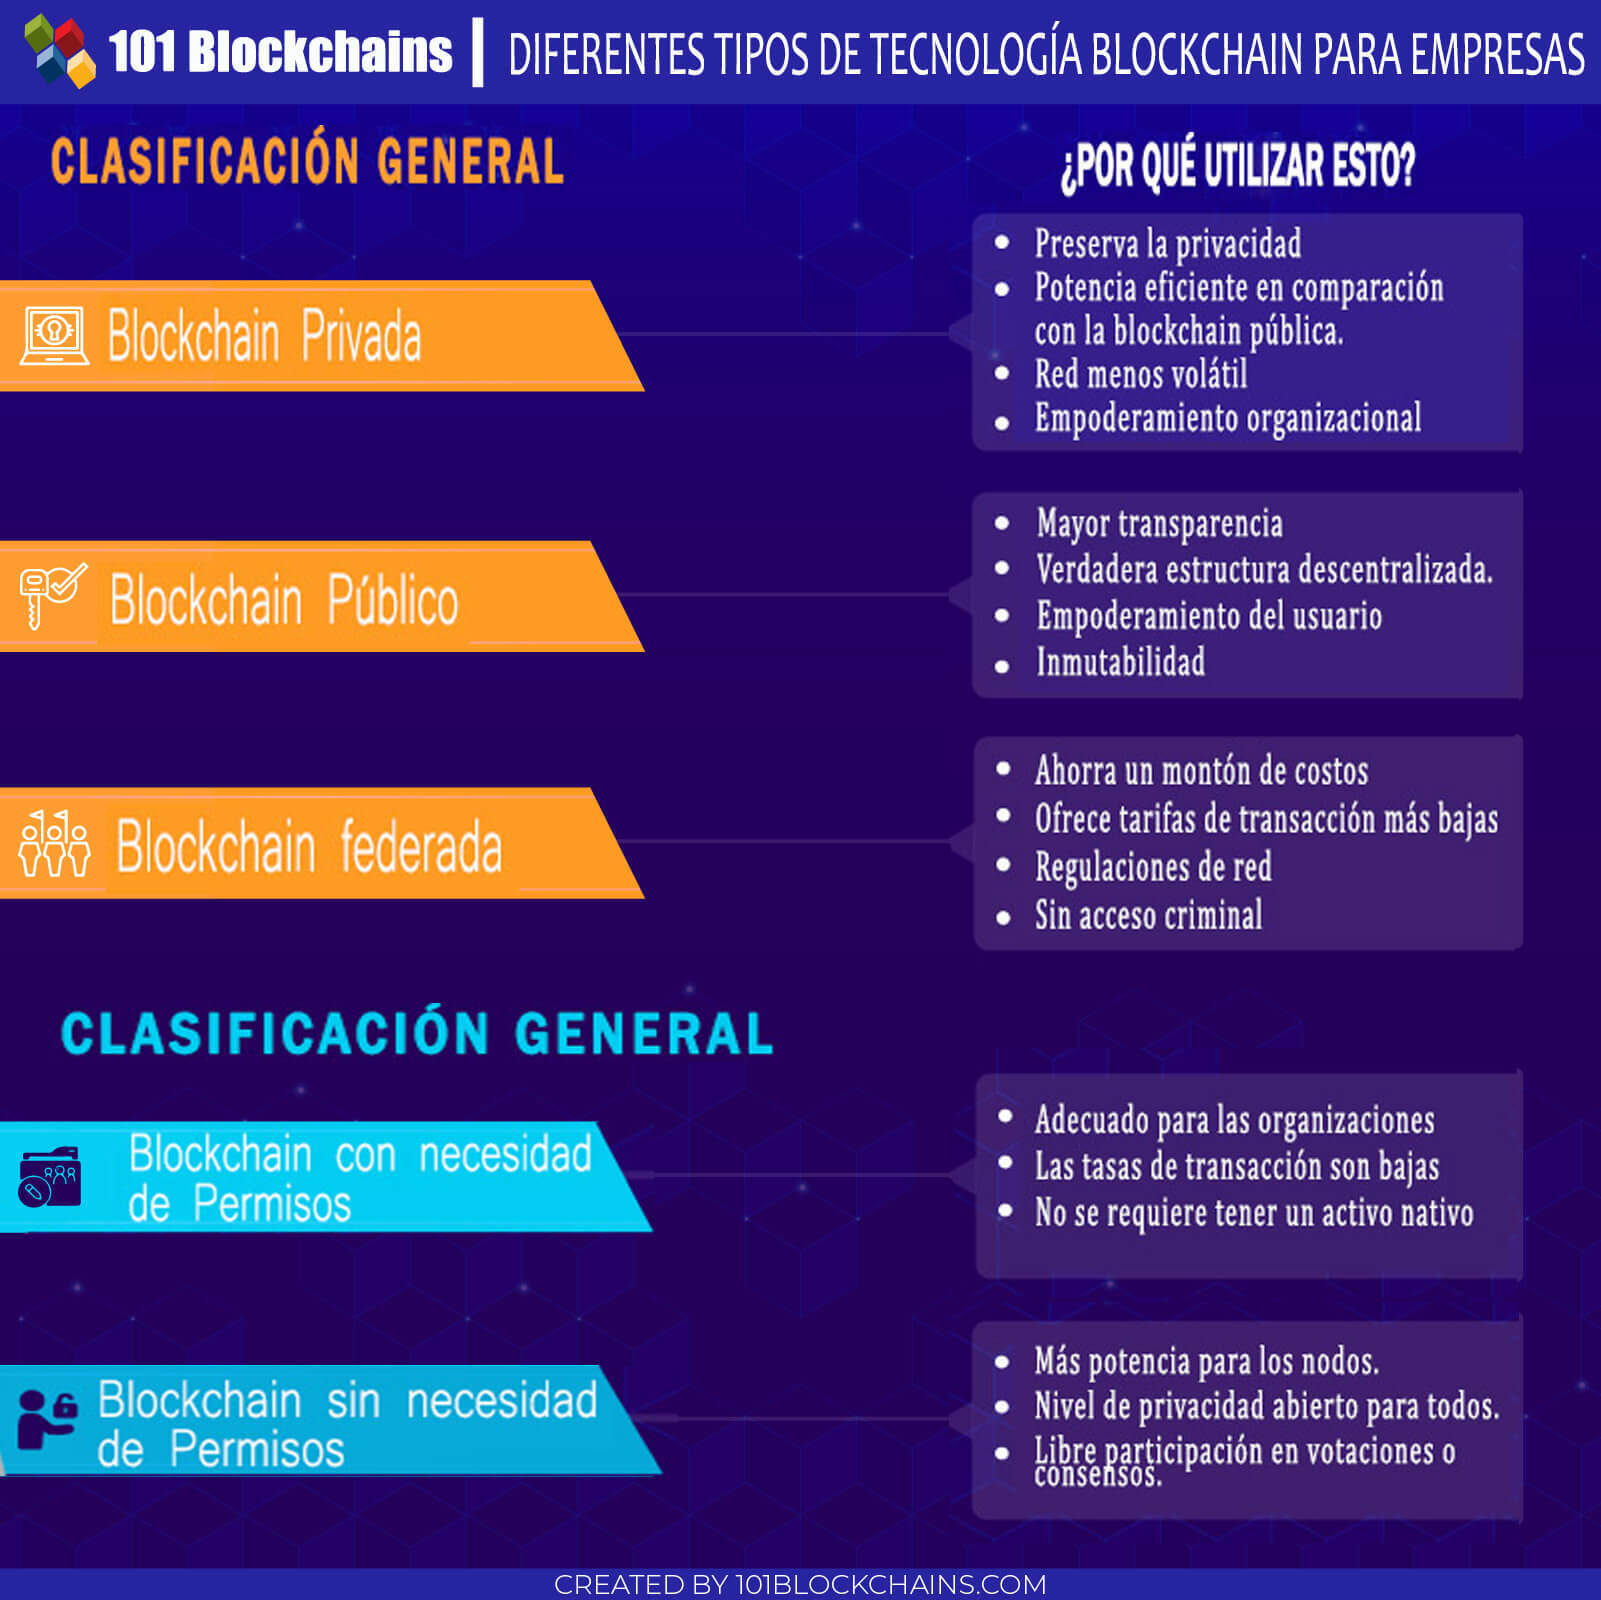 DIFERENTES TIPOS DE TECNOLOGÍA BLOCKCHAIN PARA EMPRESAS